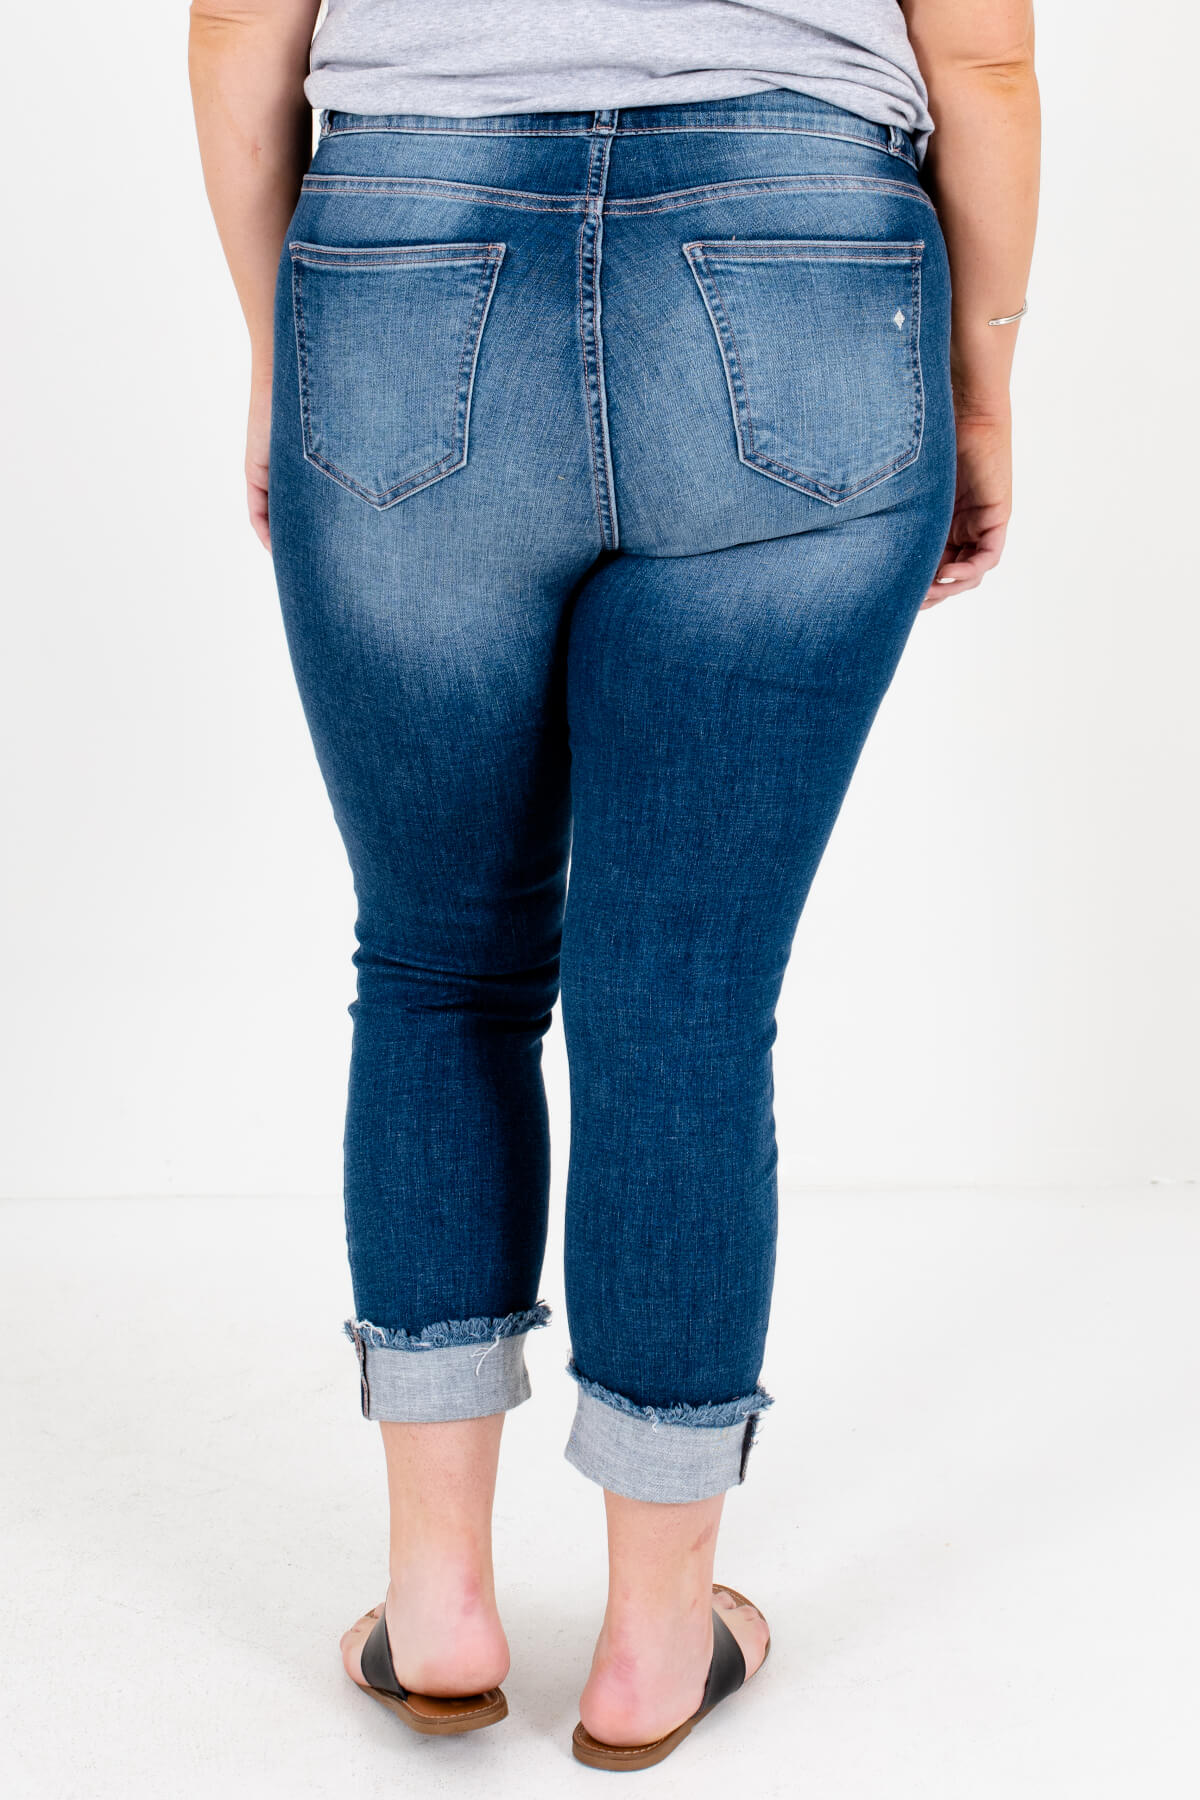 Women's Medium Wash Blue Denim Cuffed Sleeve Plus Size Boutique Jeans